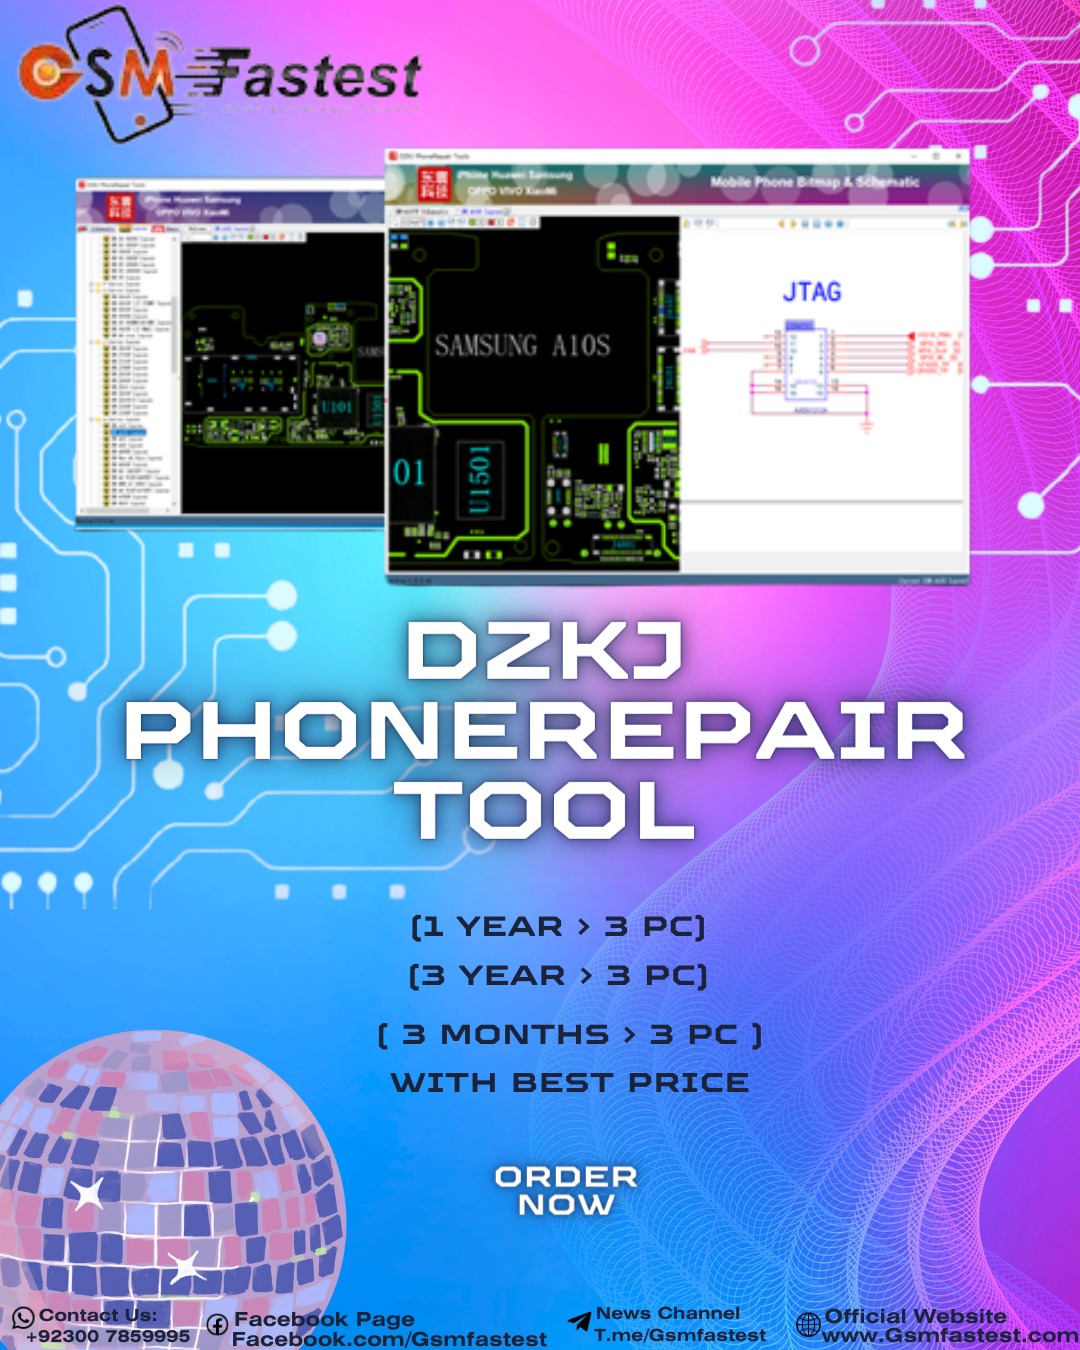 DZKJ PhoneRepair Tools (3Year > 3 PC) service